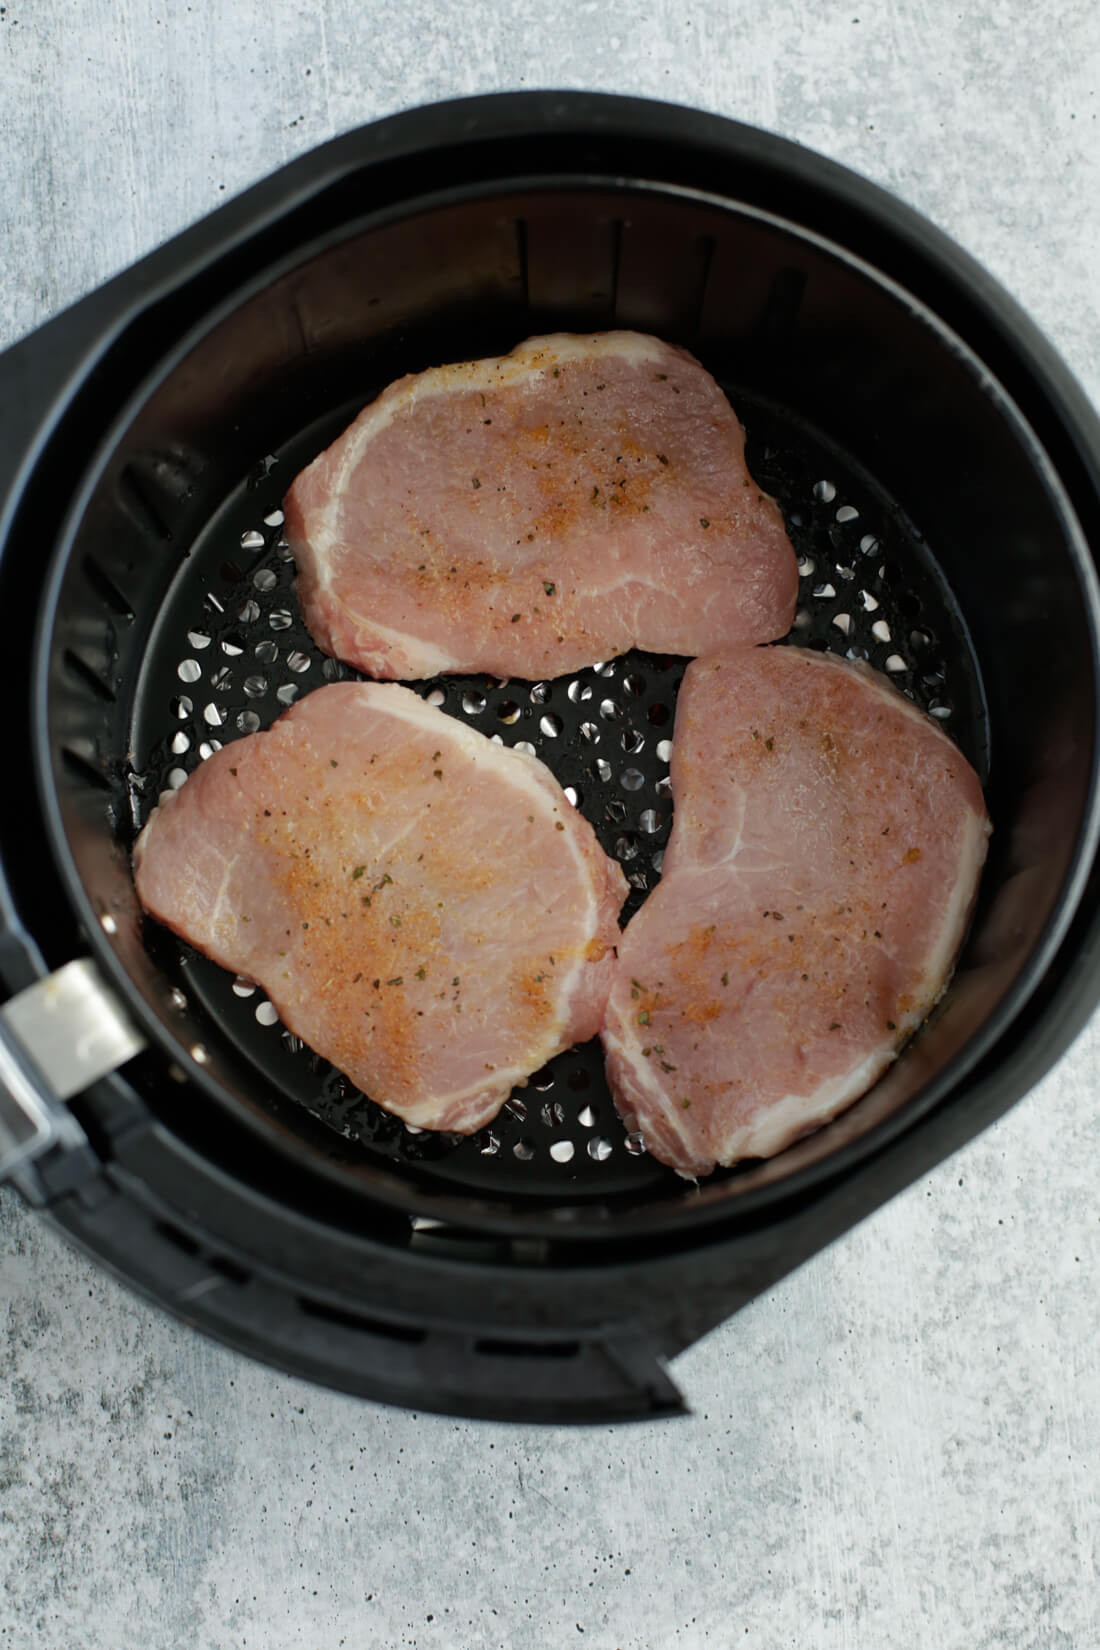 1 inch pork chops in air fryer